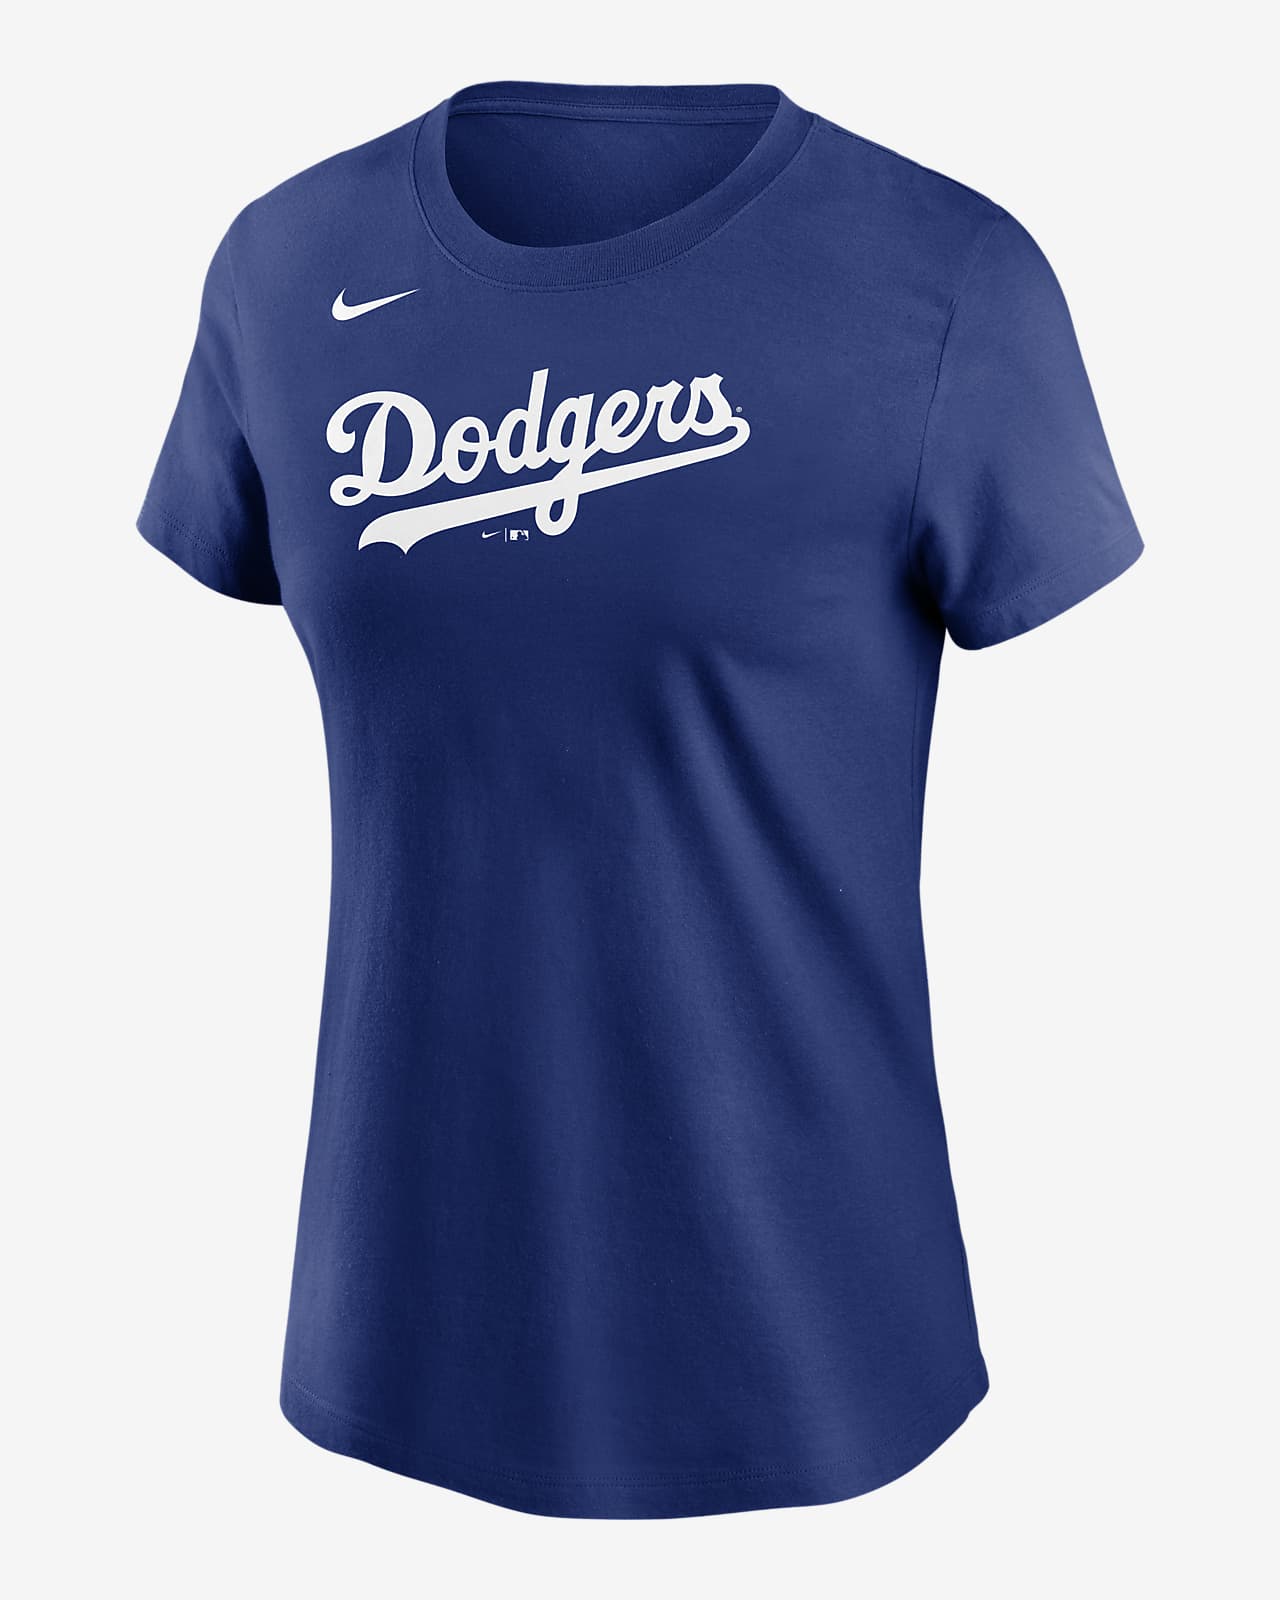 MLB Los Angeles Dodgers (Cody Bellinger) Women's T-Shirt.